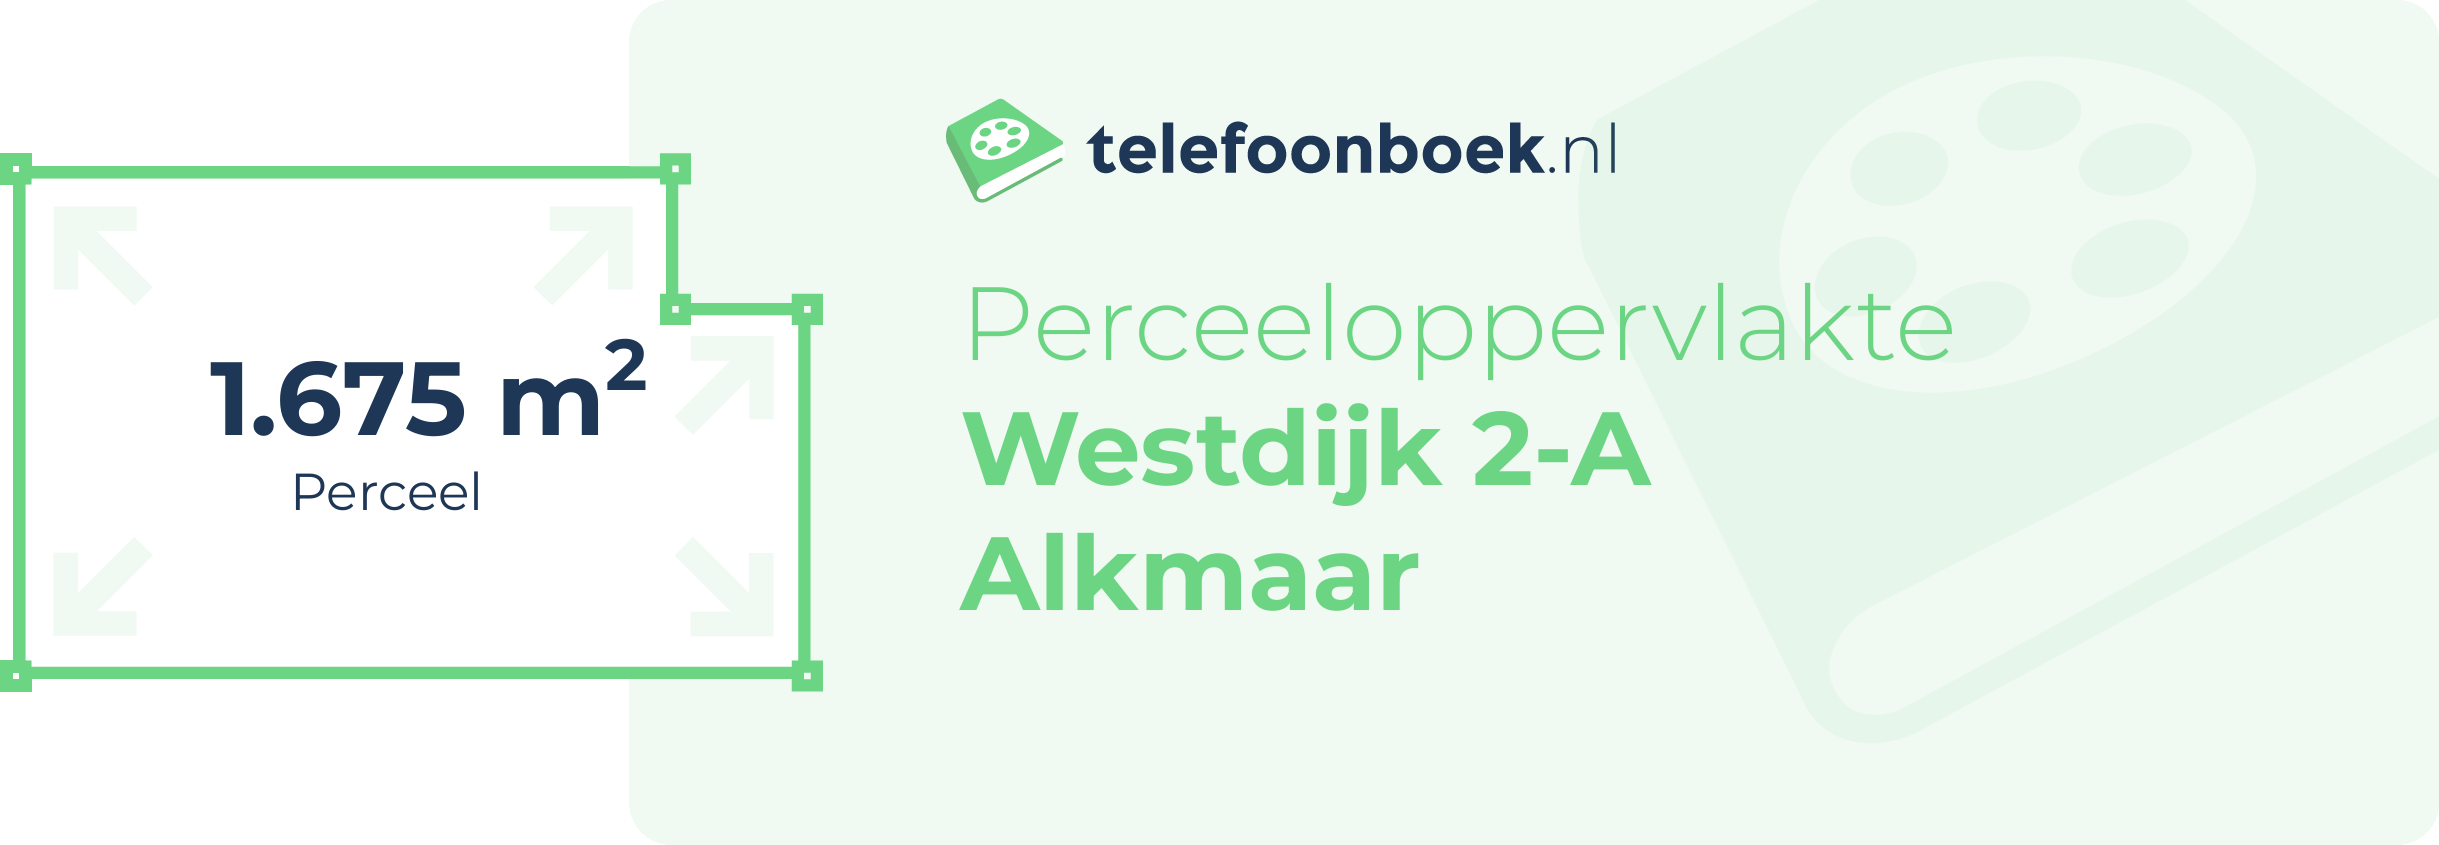 Perceeloppervlakte Westdijk 2-A Alkmaar